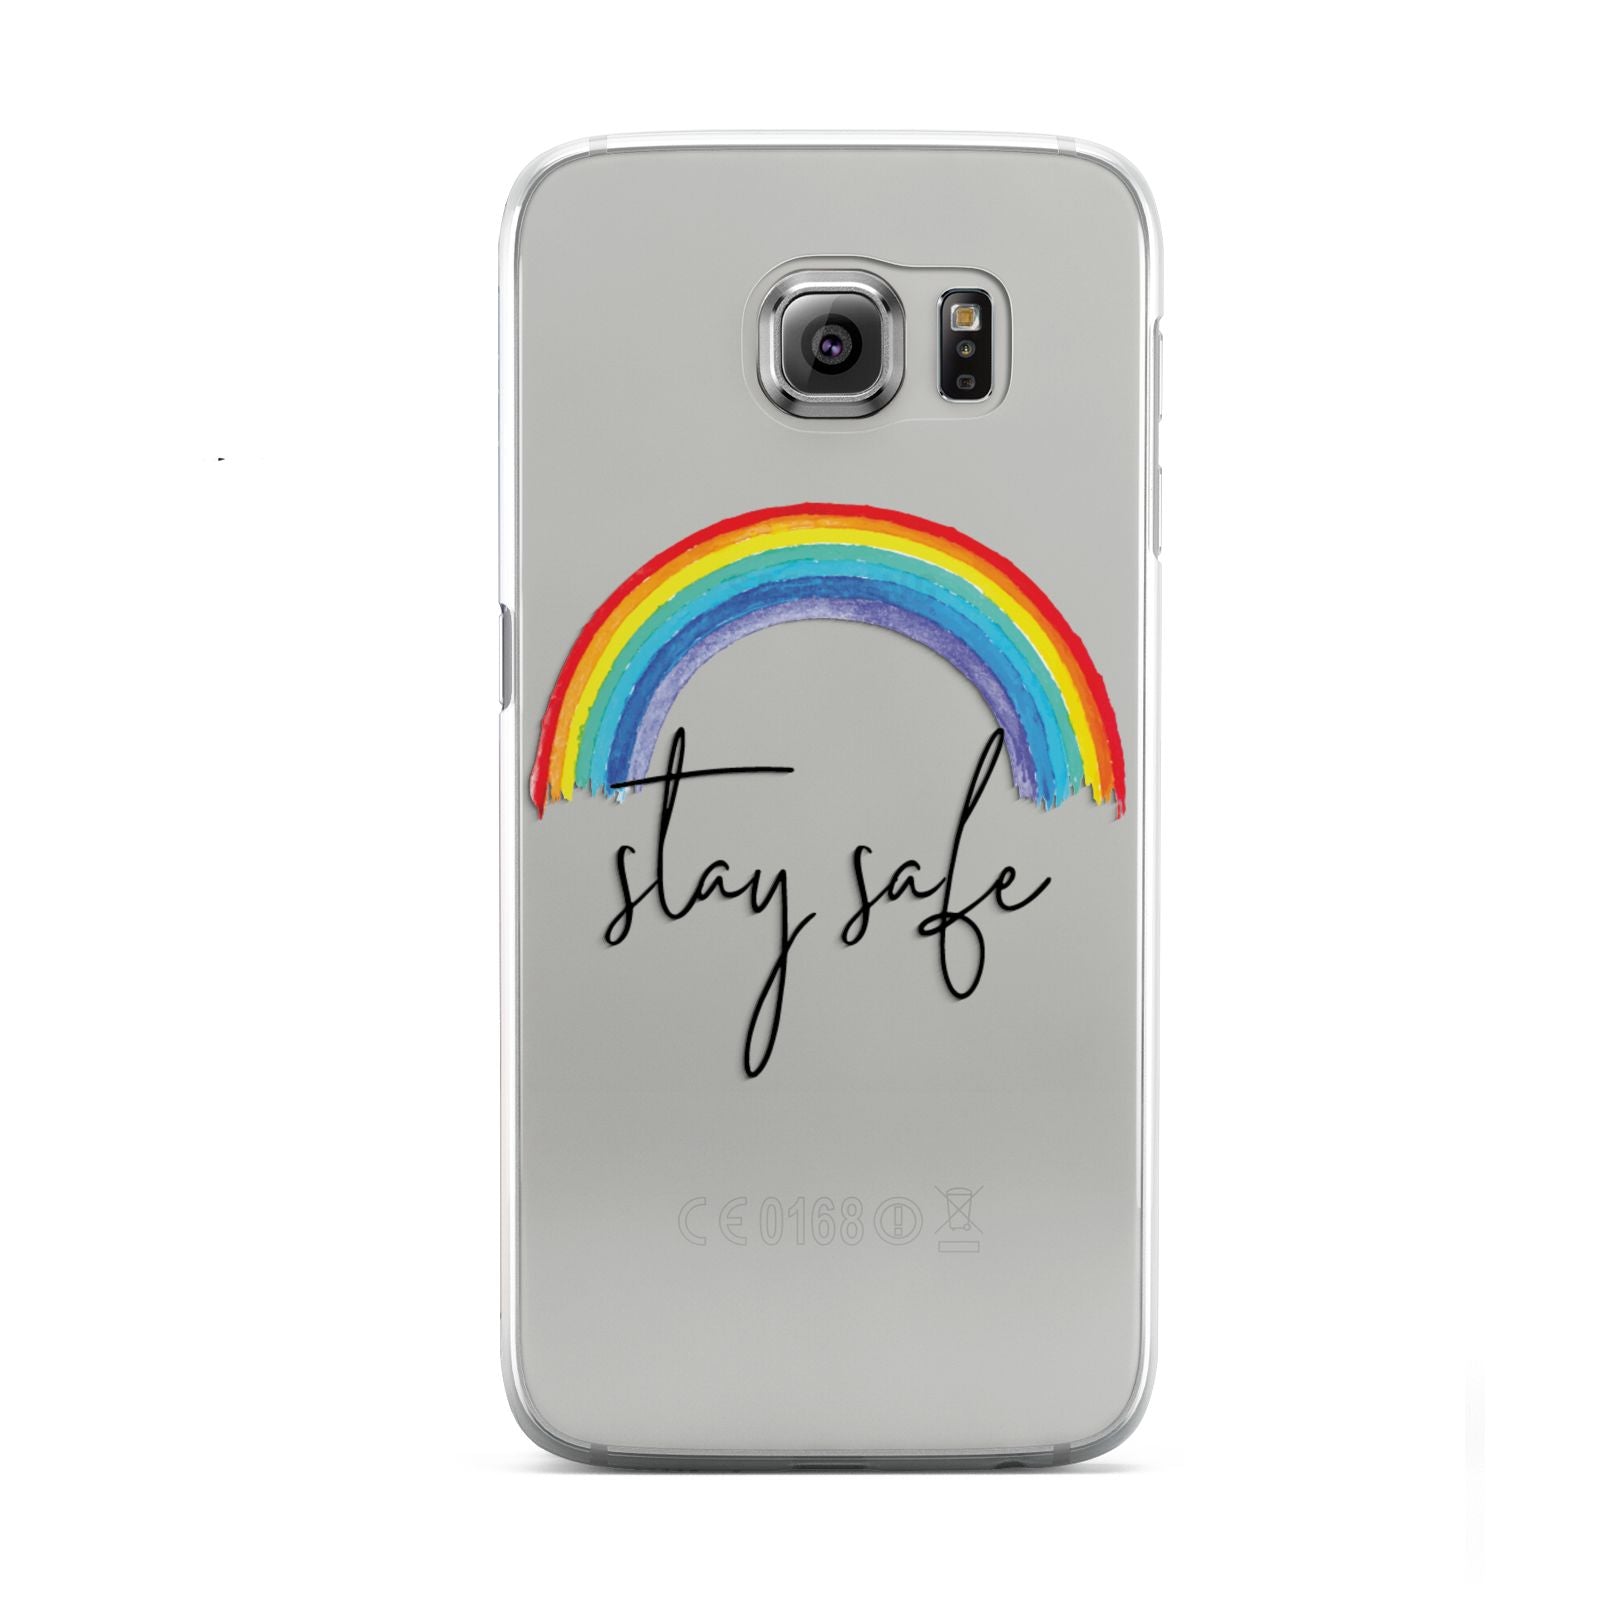 Stay Safe Rainbow Samsung Galaxy S6 Case